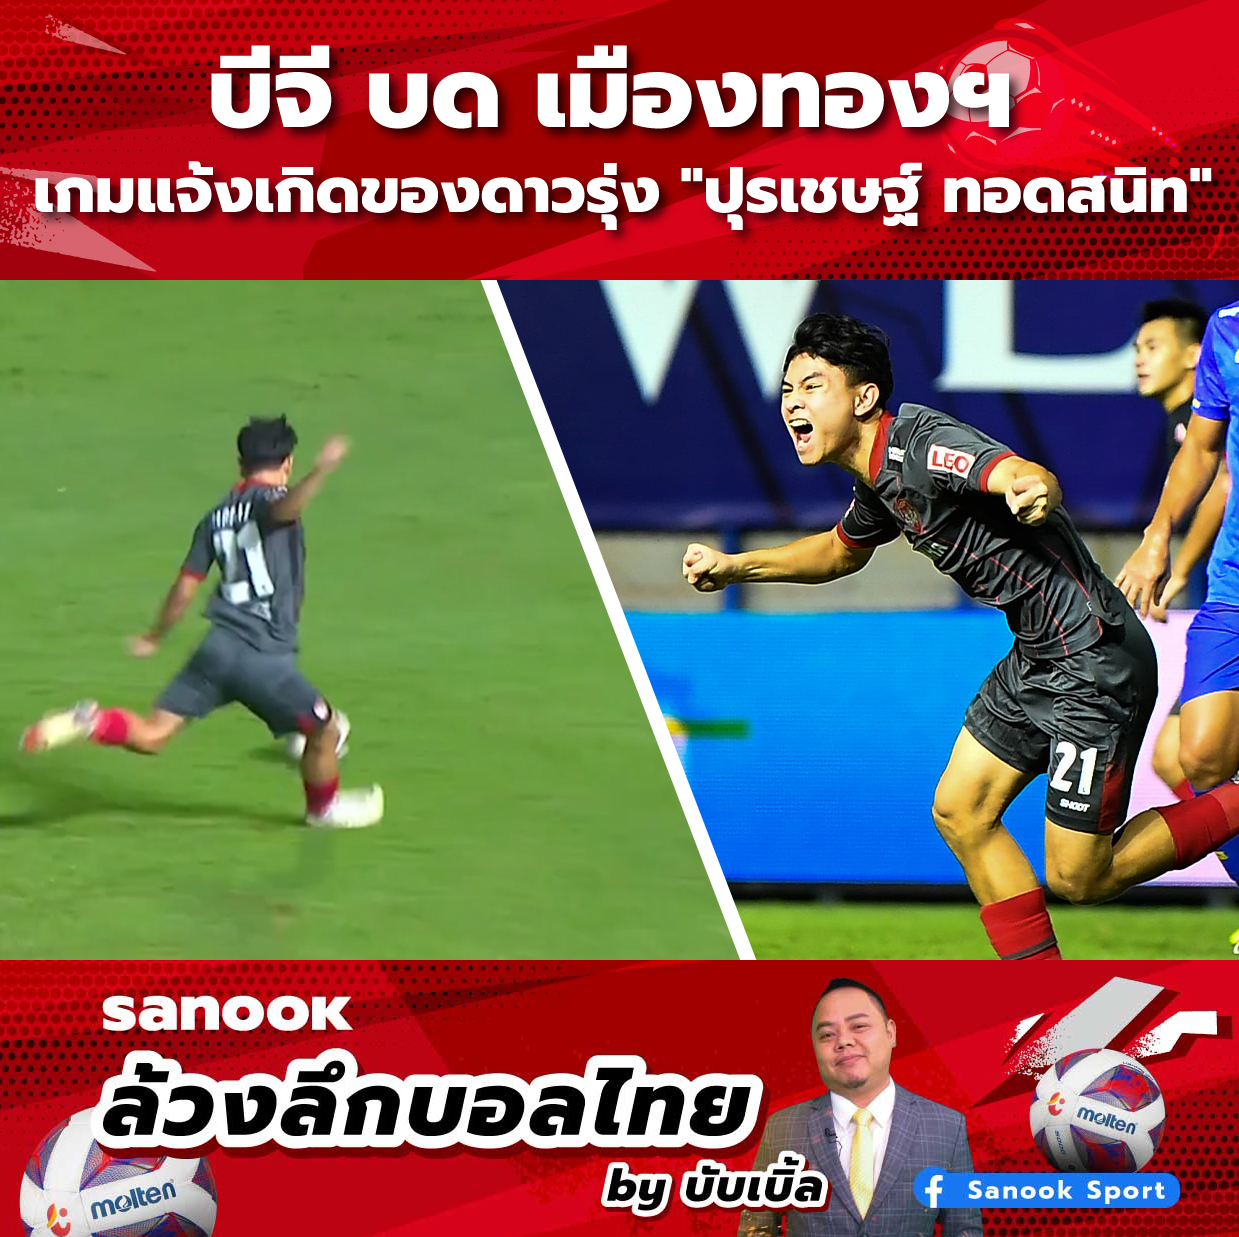 Sanook ล้วงลึกบอลไทย by บับเบิ้ล บี จี บด เมืองทองฯ พร้อมเกมแจ้งเกิดของดาวรุ่ง "ปุรเชษฐ์ ทอดสนิท"